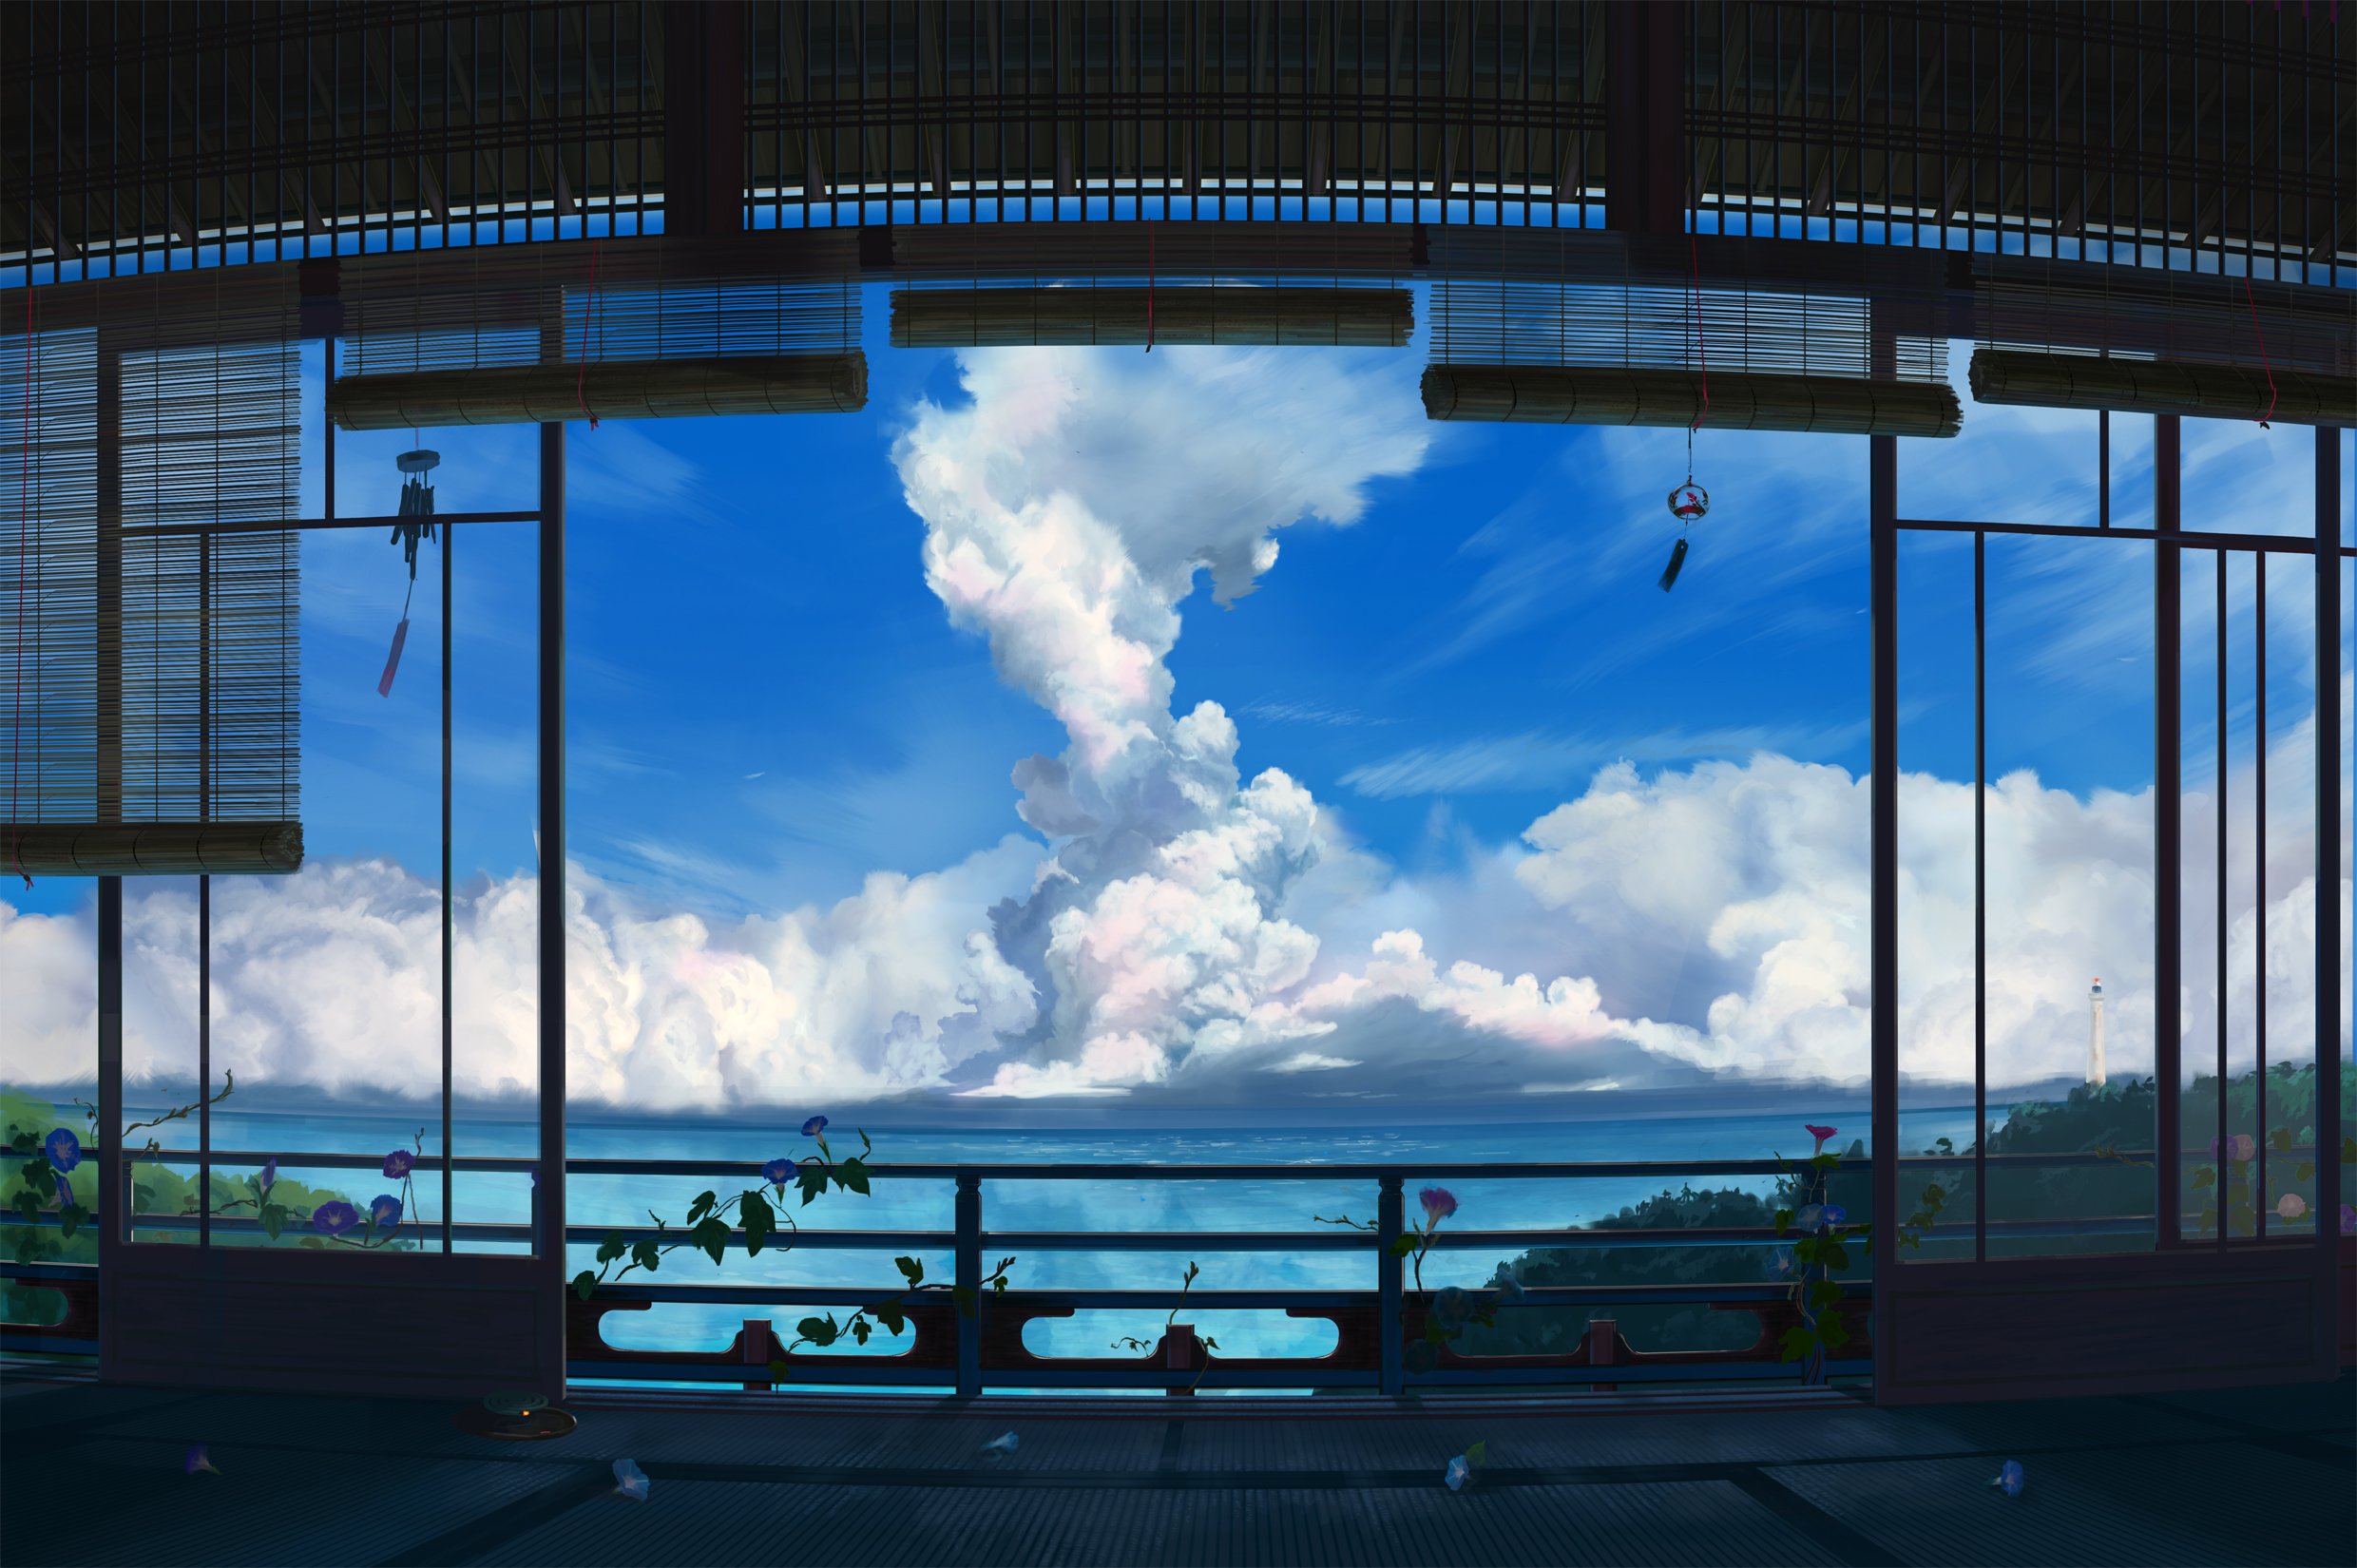 Wallpaper, window, sunset, architecture, anime, nature, reflection, sky, artwork, clouds, blue, evening, stadium, light, color, cloud, shape, urban area 2480x1650